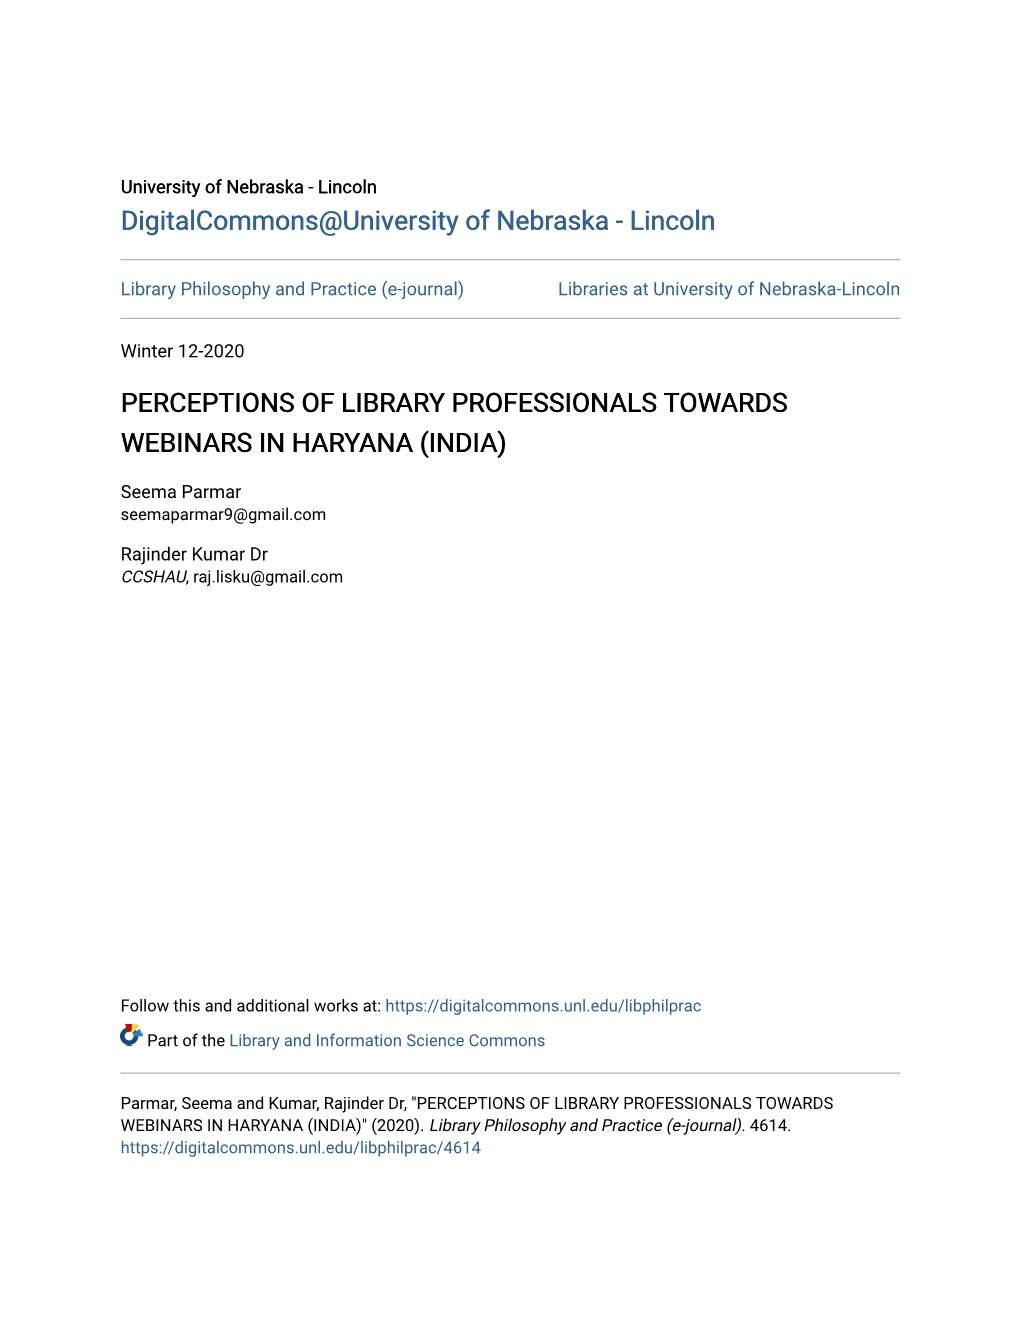 Perceptions of Library Professionals Towards Webinars in Haryana (India)